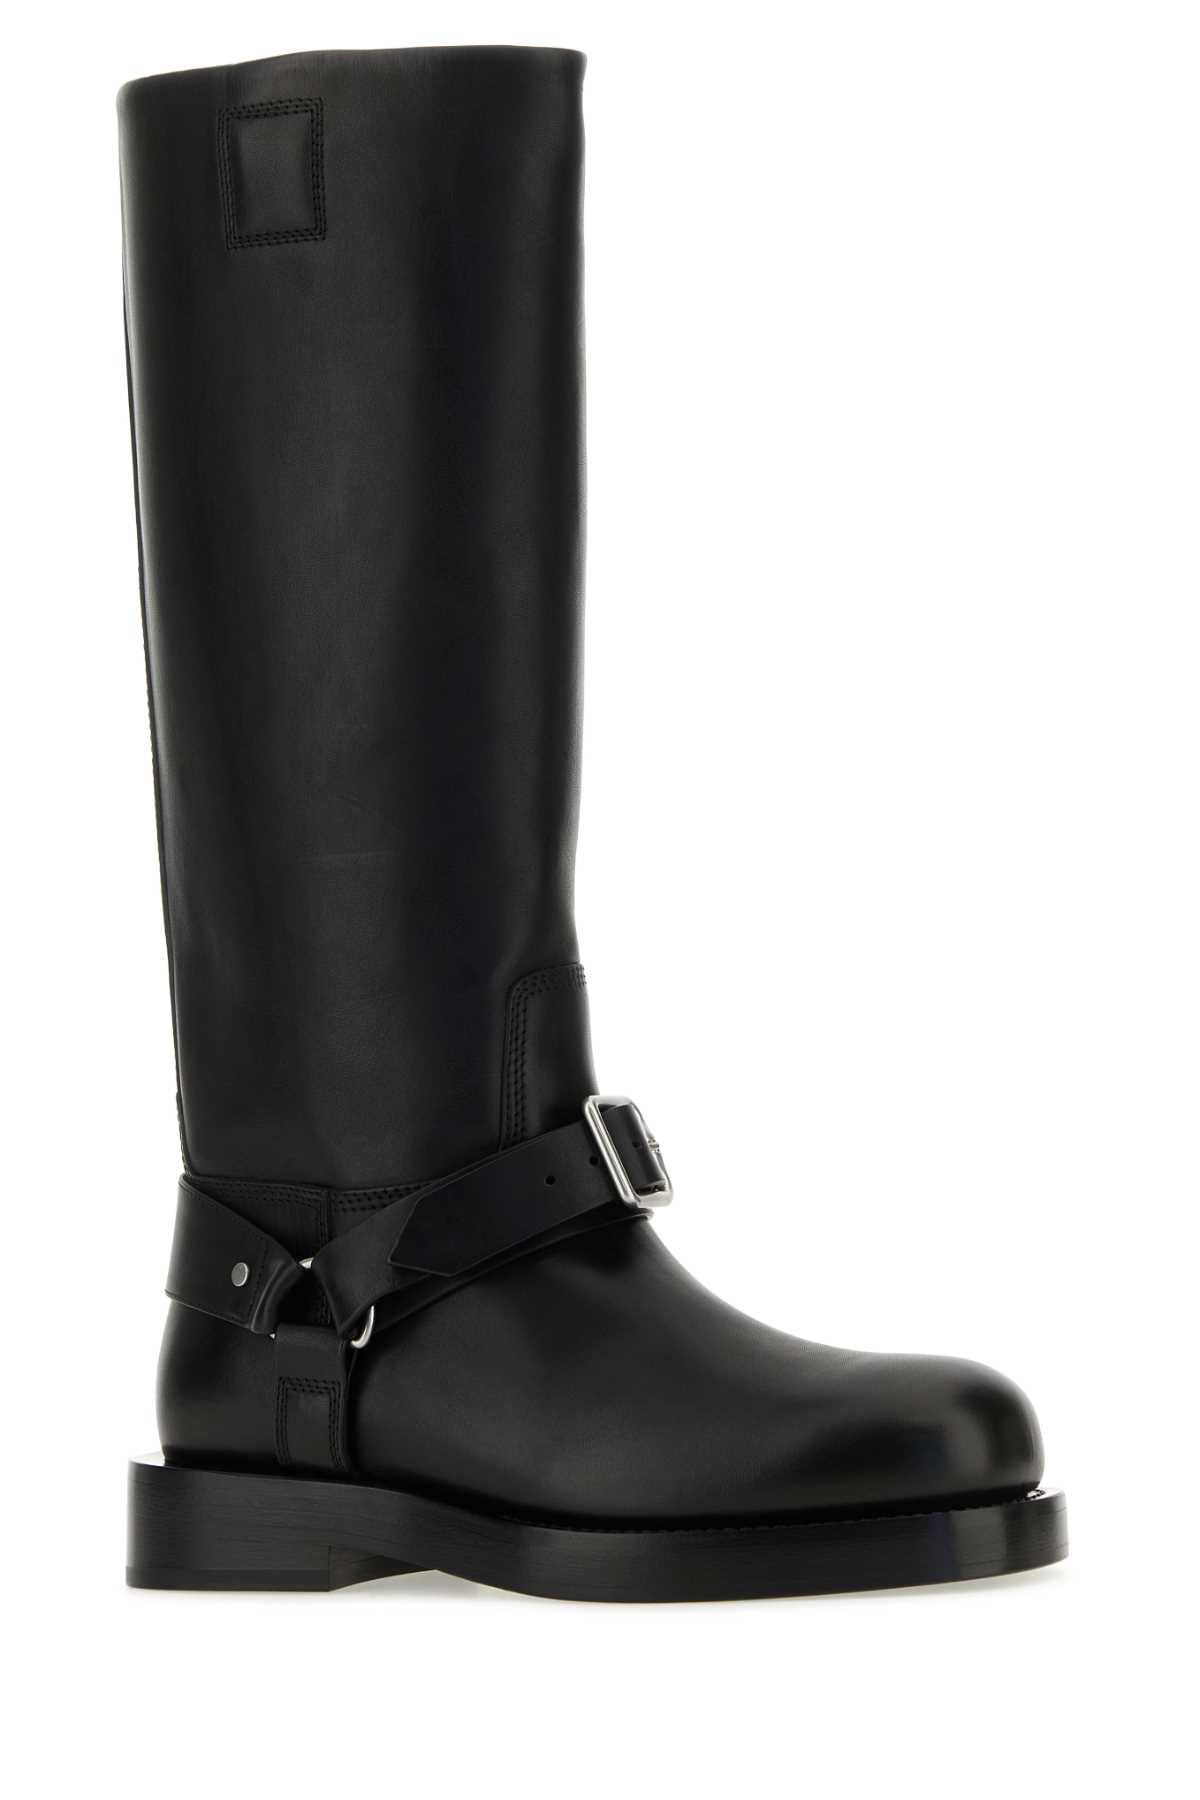 Shop Burberry Black Leather Saddle Boots